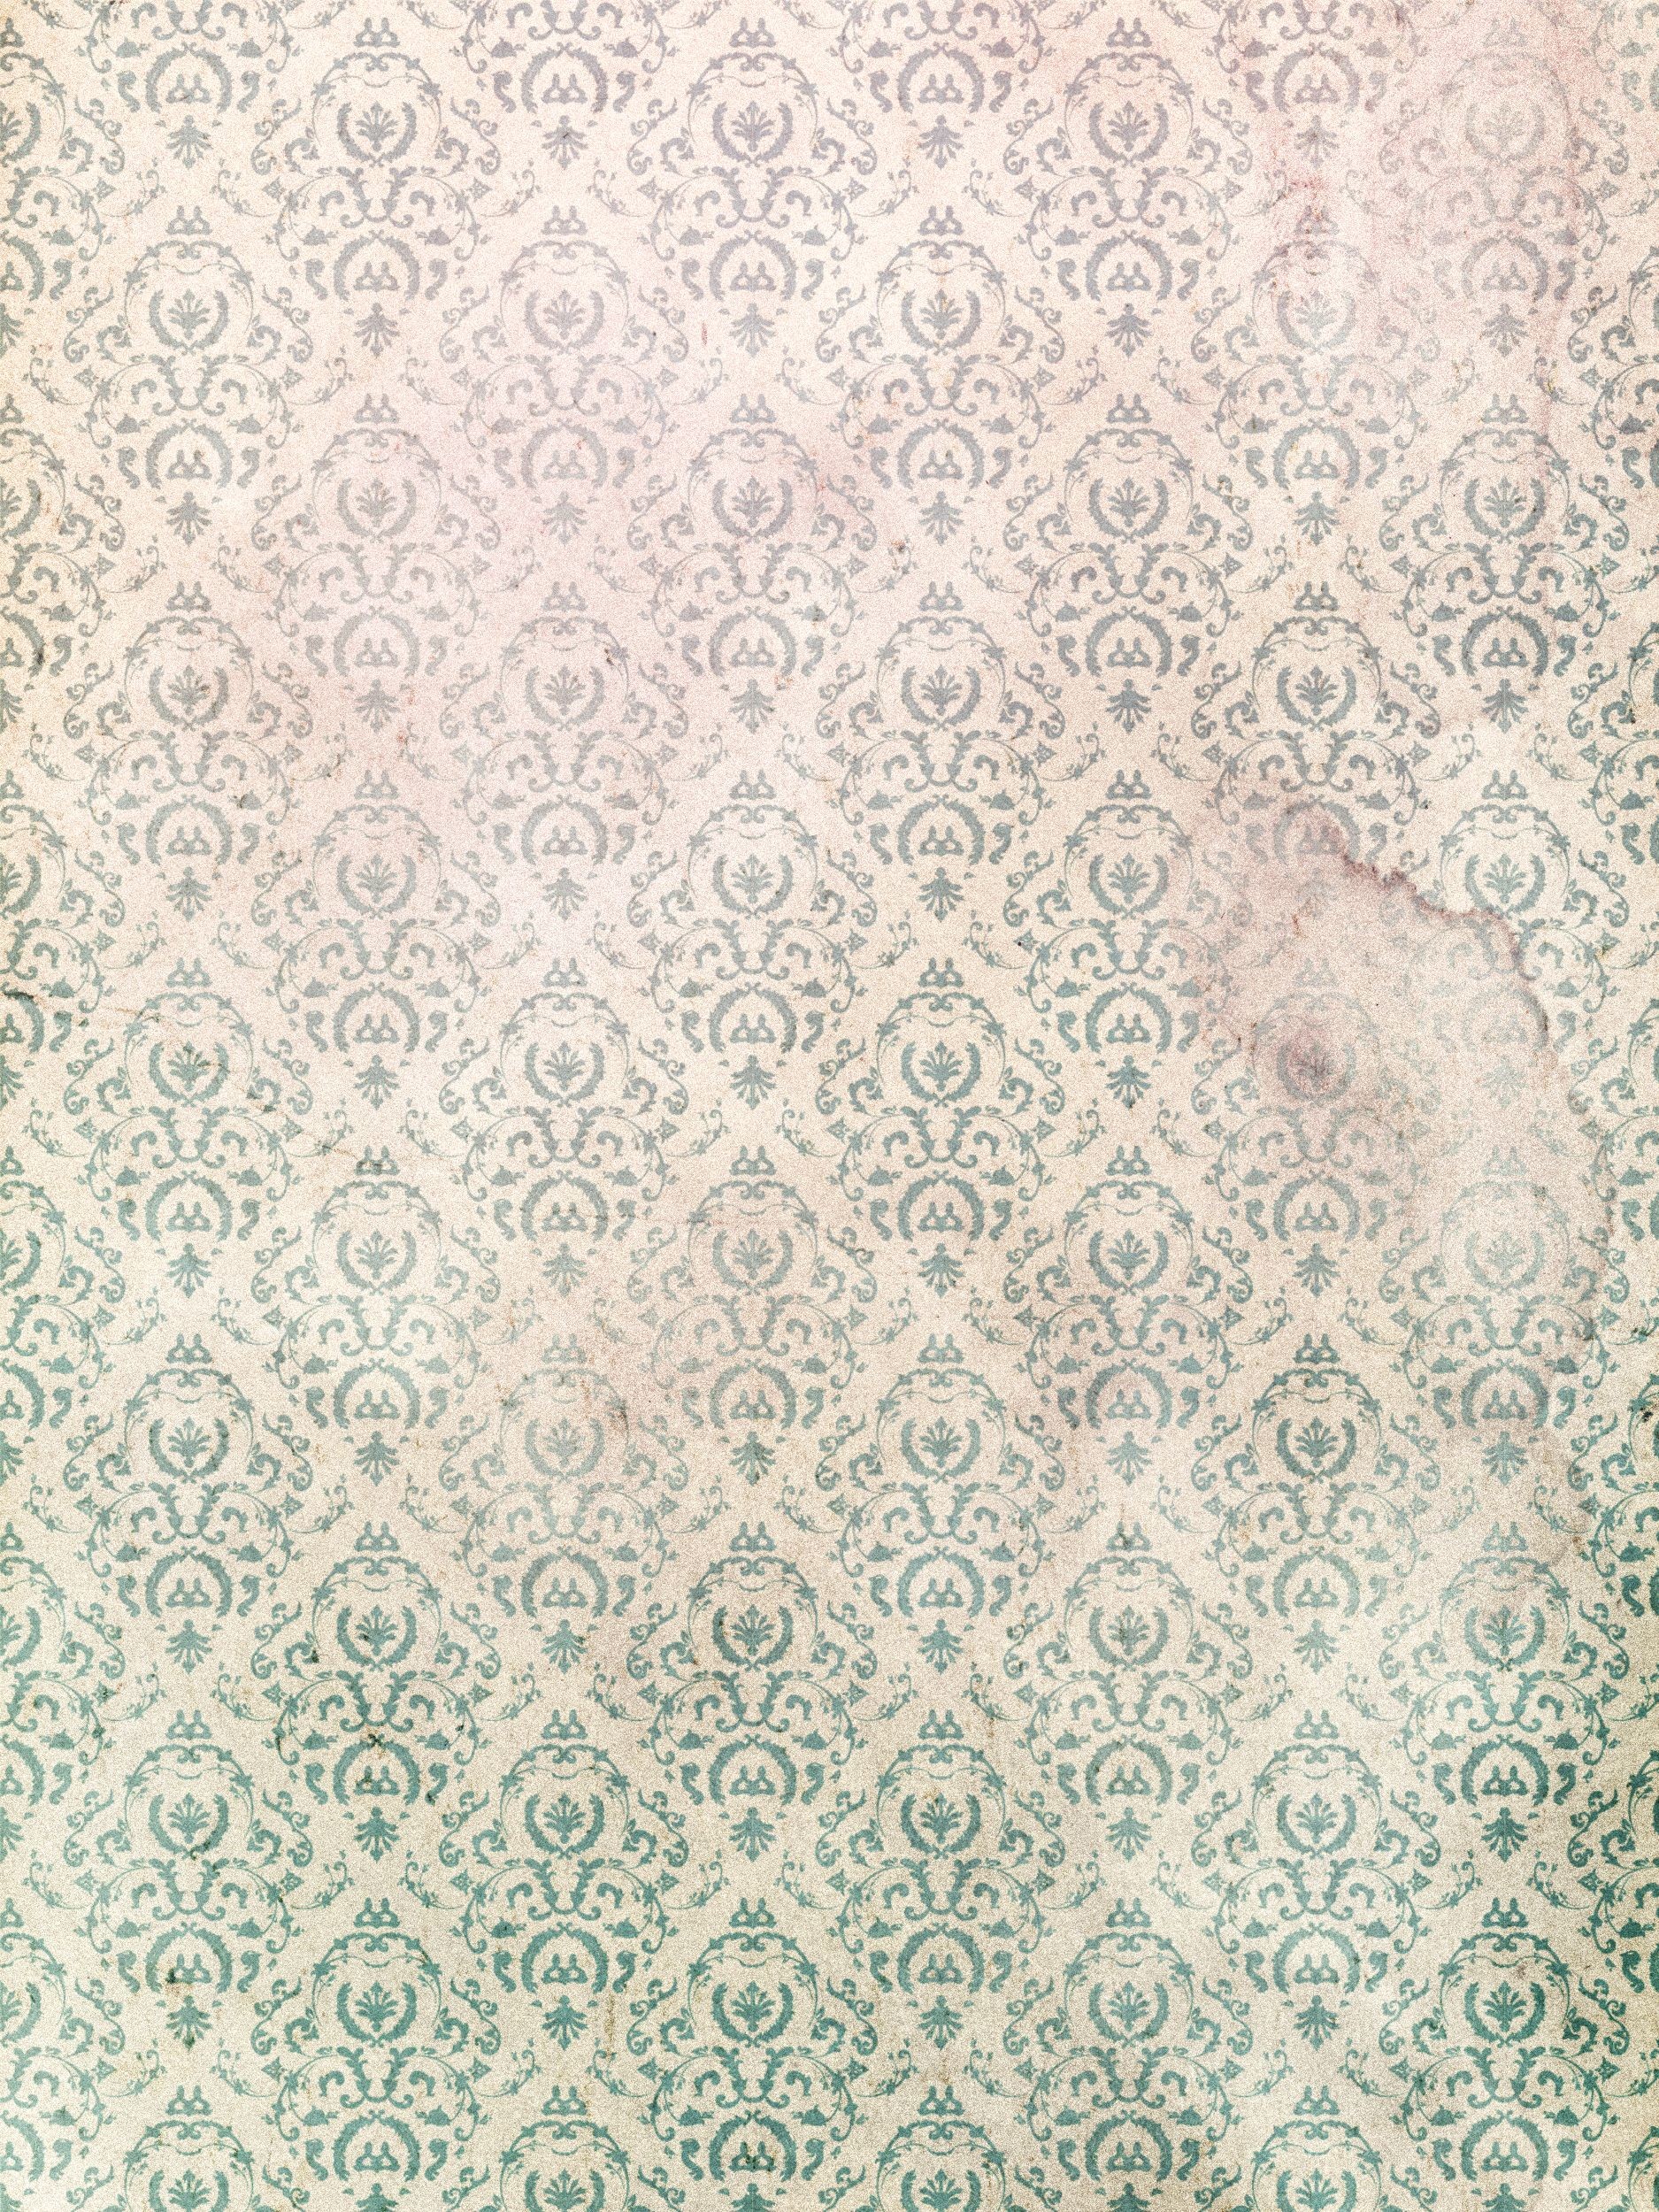 1875x2500 vintage wallpaper | Vintage Wallpaper Textures IV